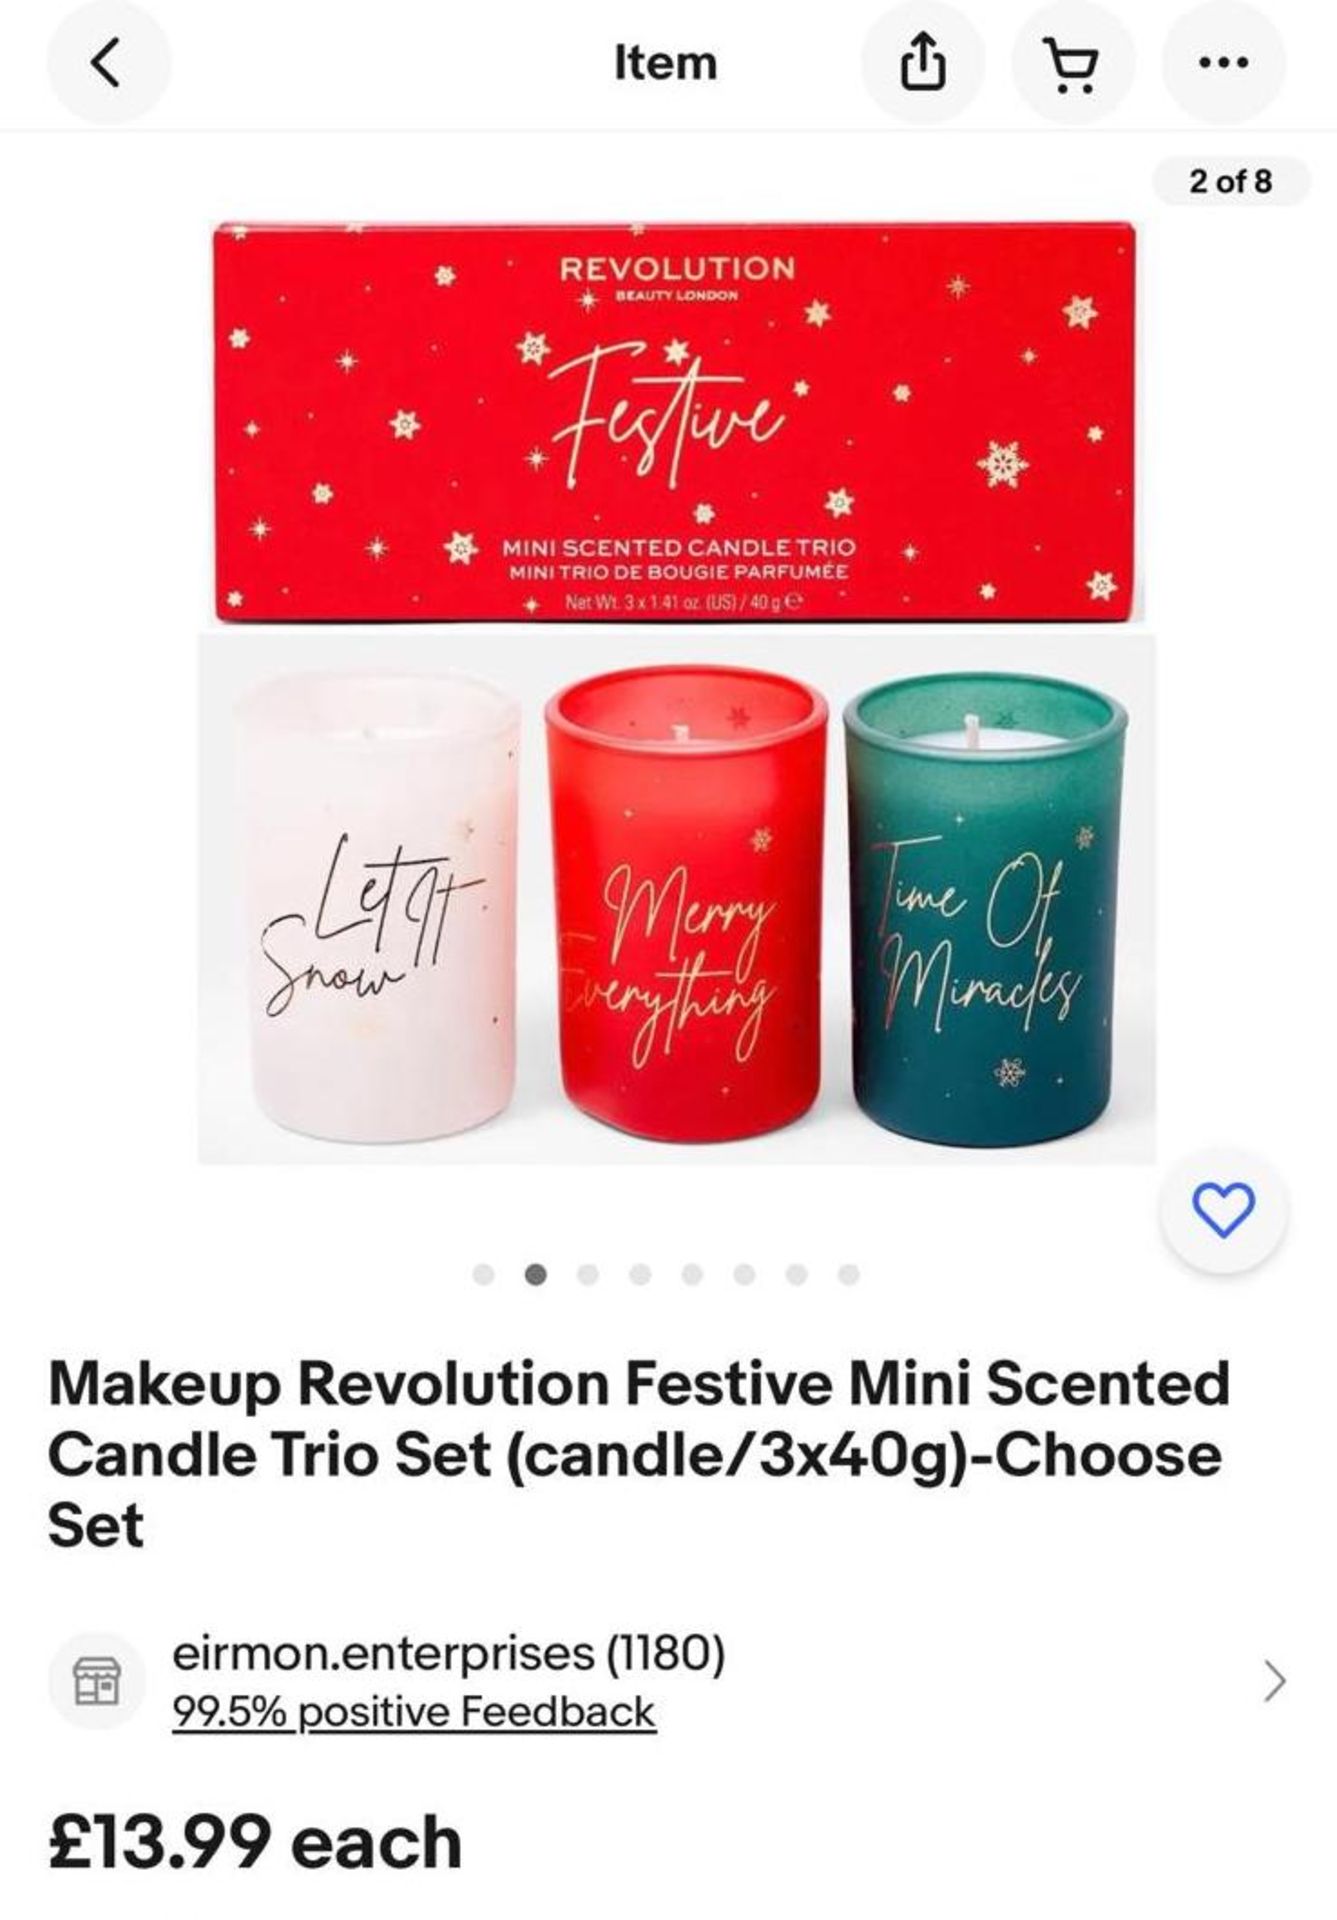 Revolution Beauty Londonâ€™ Festive Mini Scented Candle Trio Set - 3 x 40g - (NEW) - RRP Â£13.99 ! - Image 2 of 2